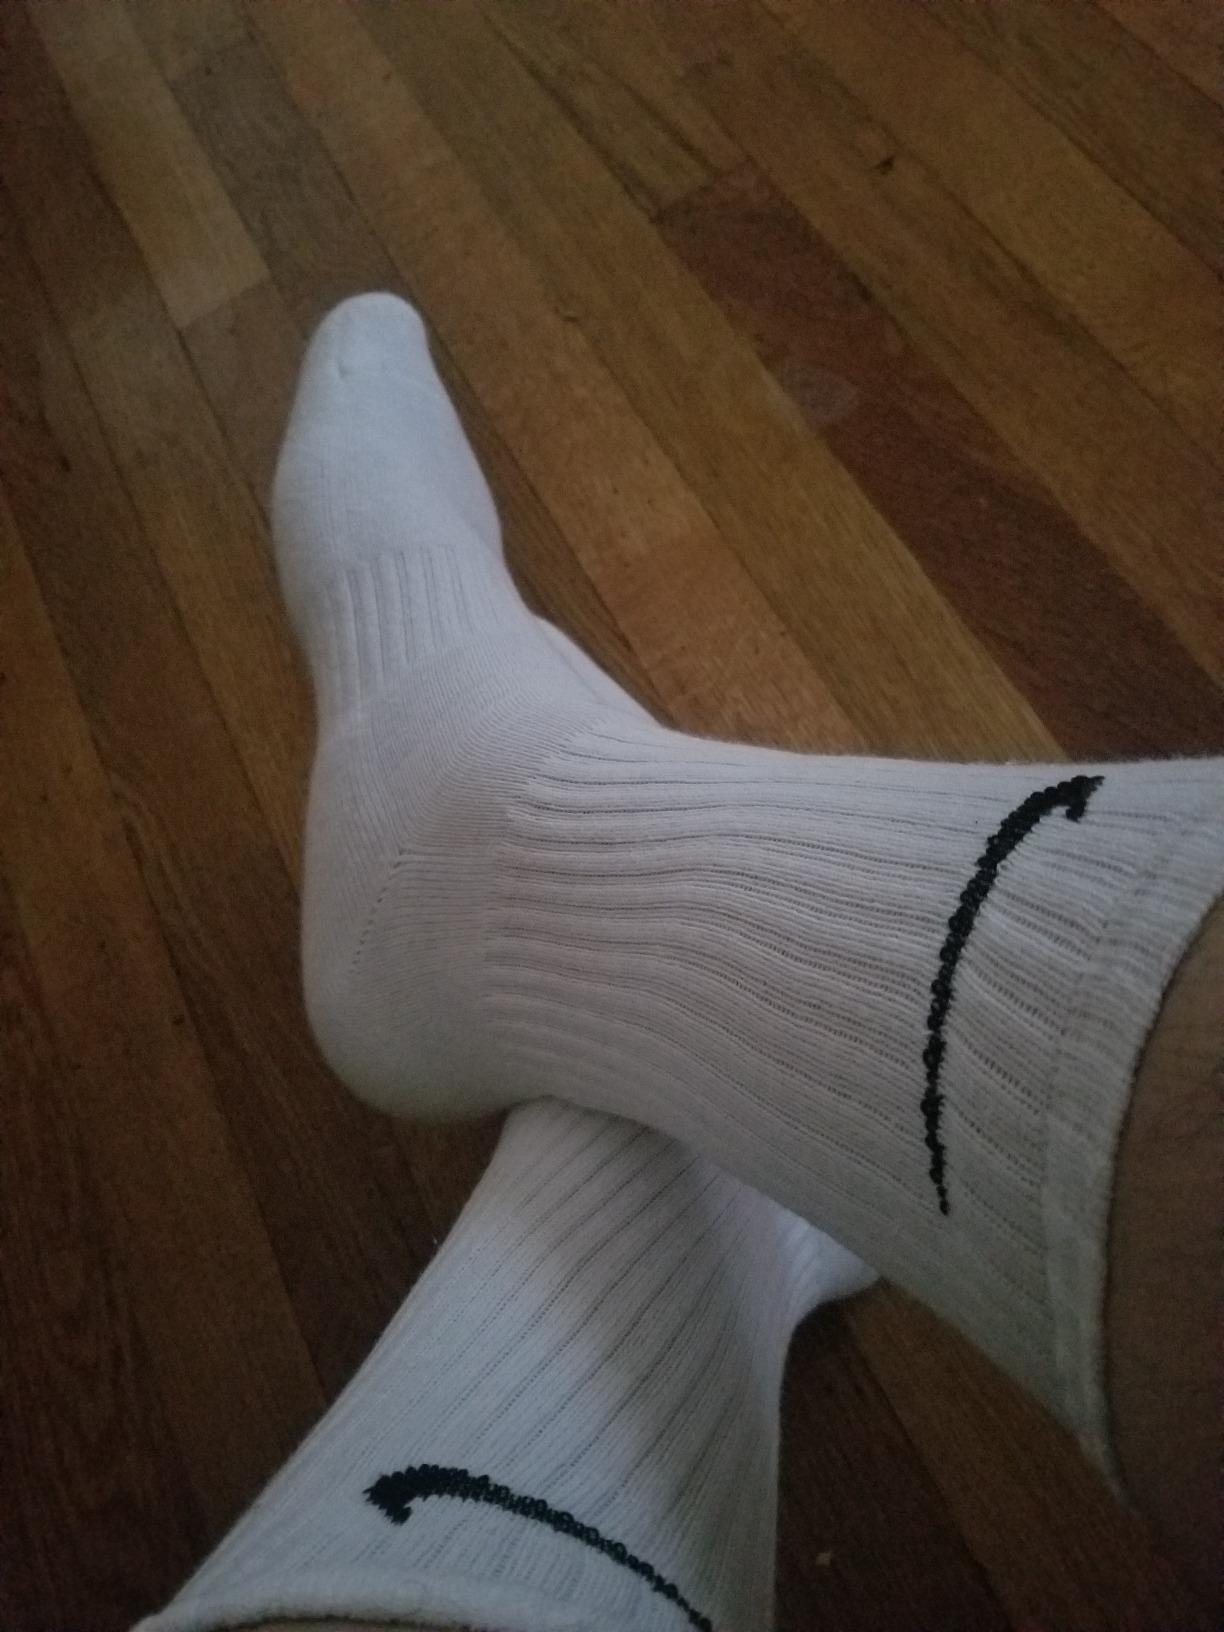 Reviewer wearing socks